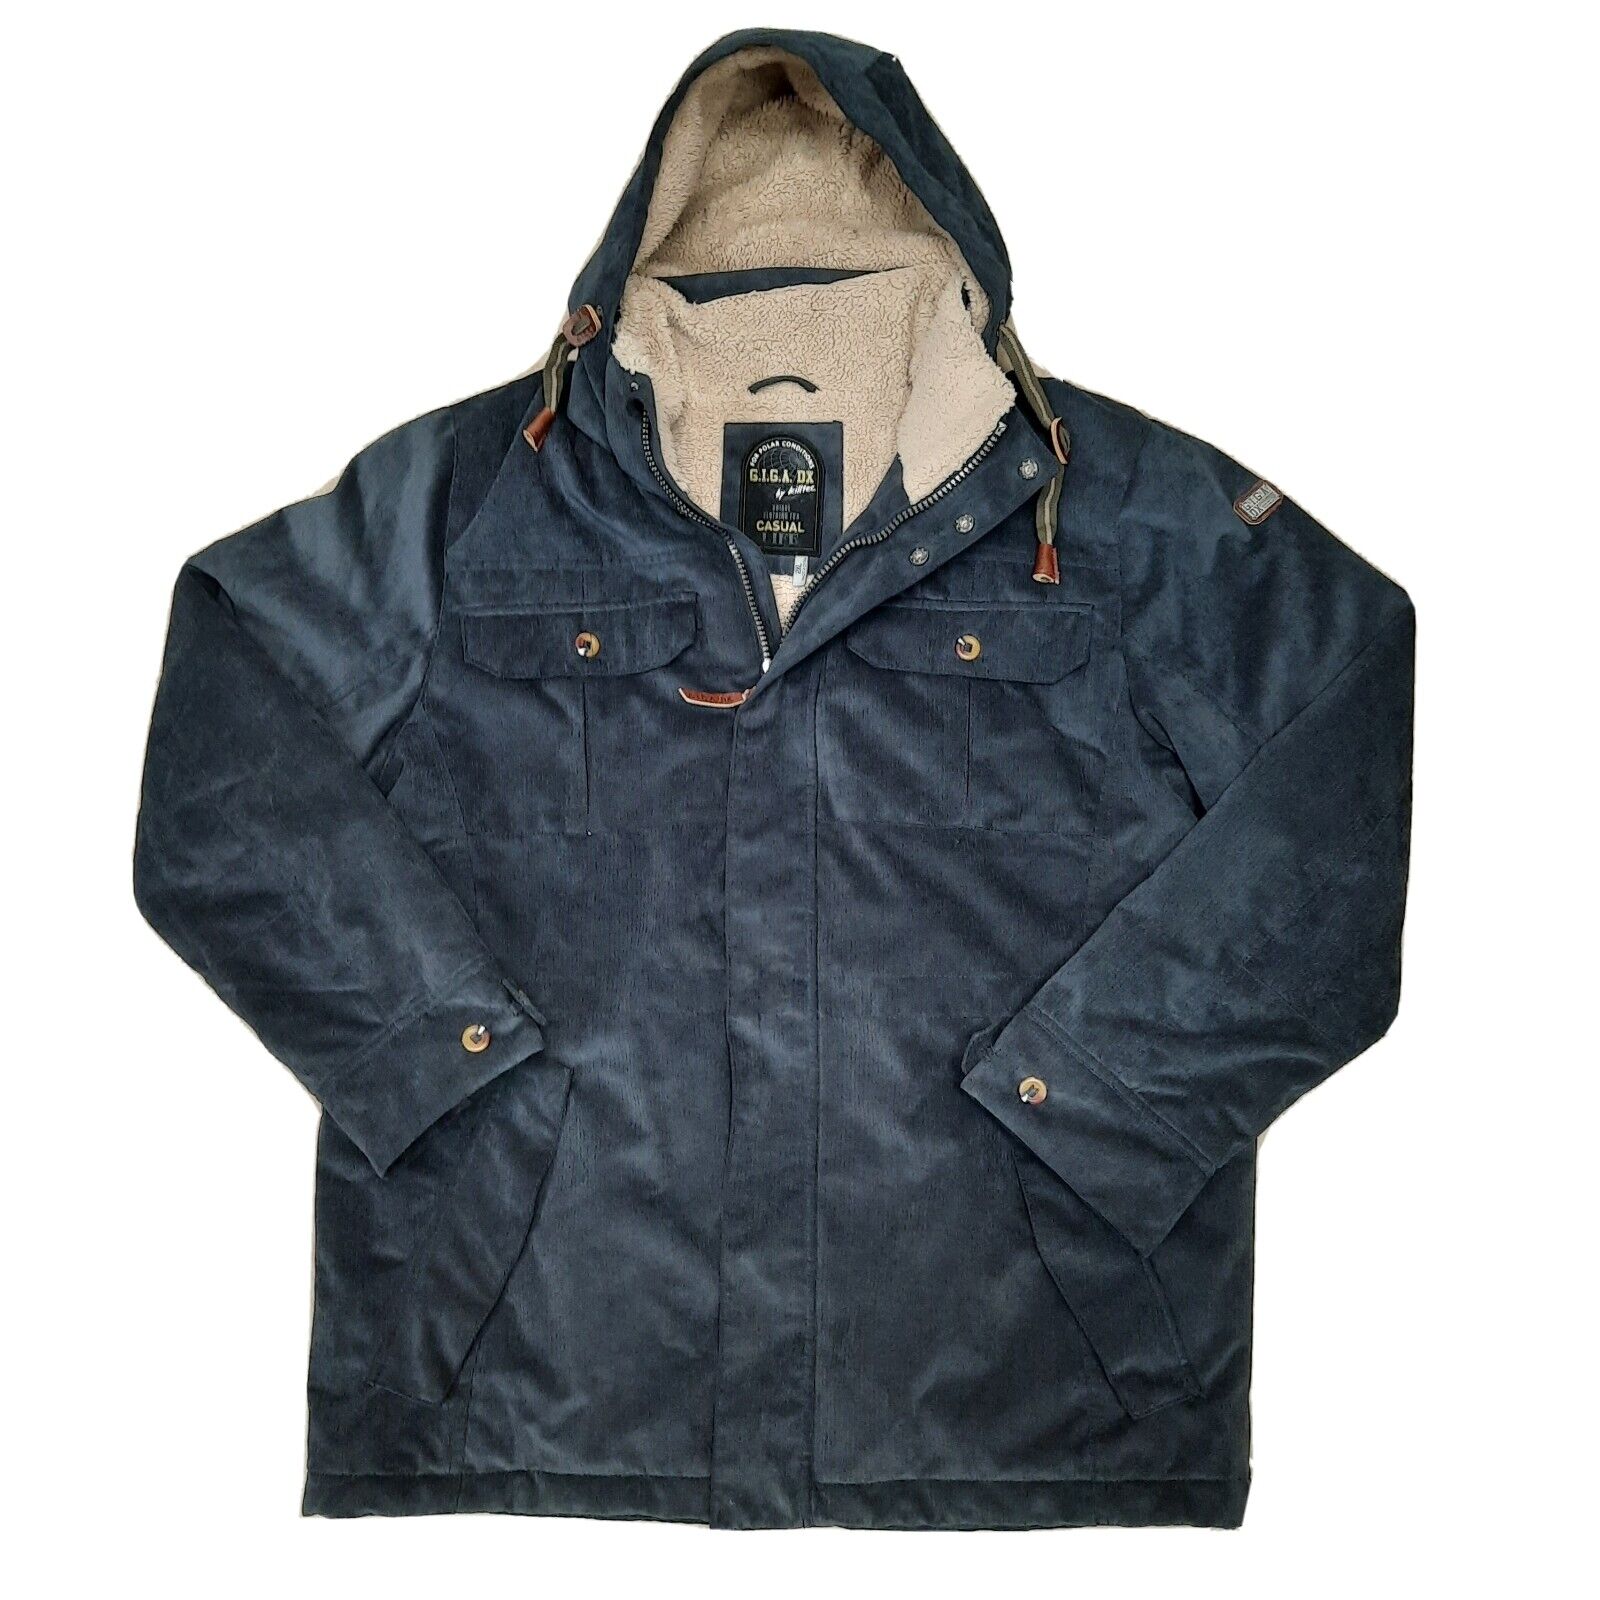 2XL Winter Casual Jacket | by DX eBay G.I.G.A. Pedolo Killtec Outdoor Jacket Men\'s Blue